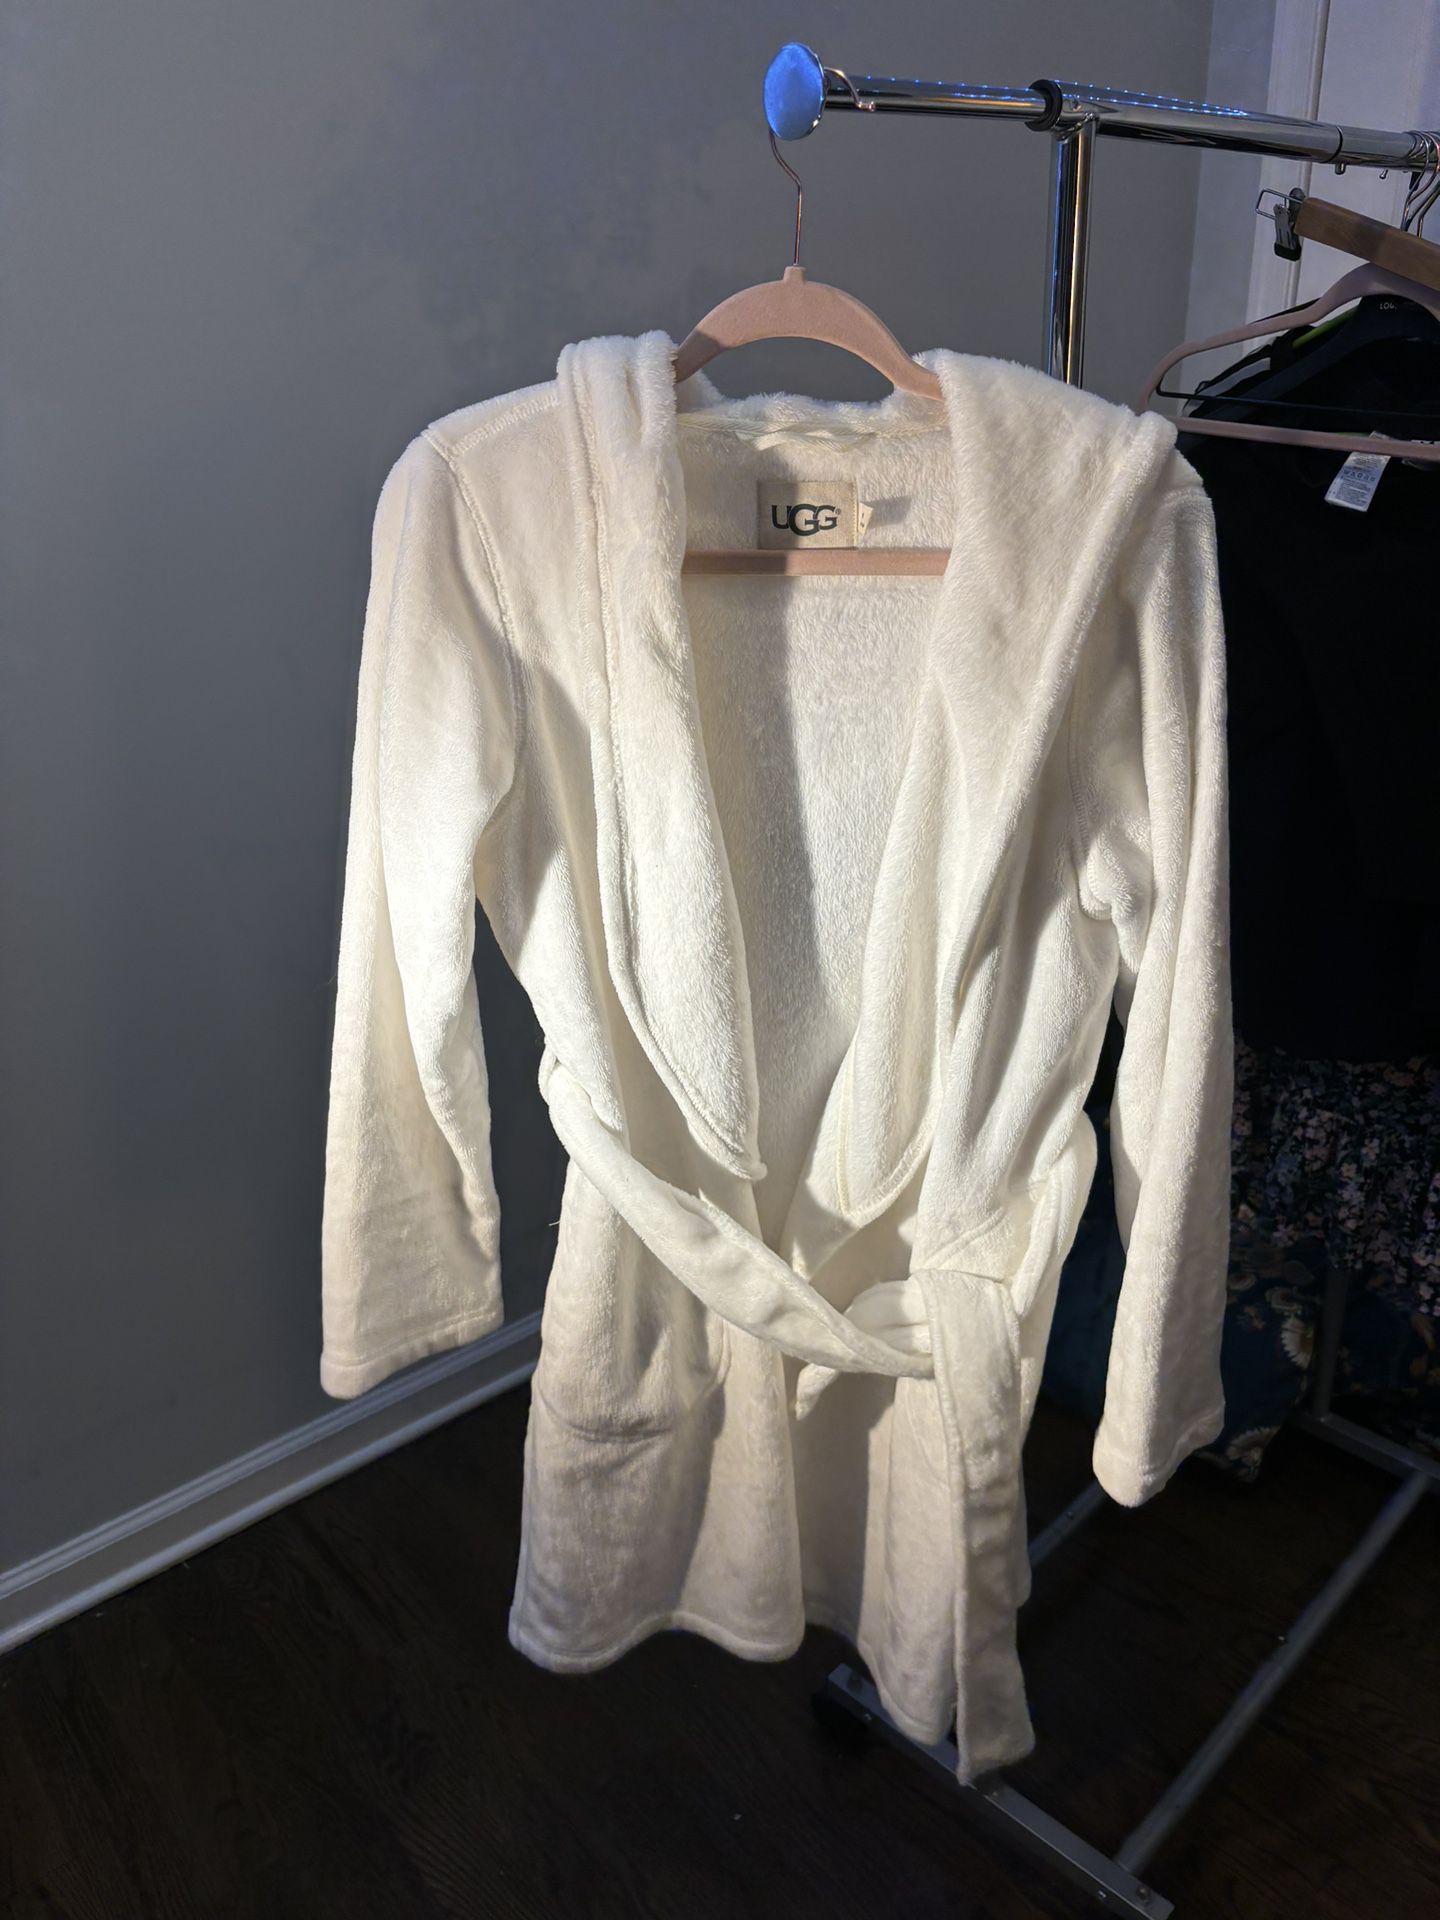 UGG White Color bathrobe for sale